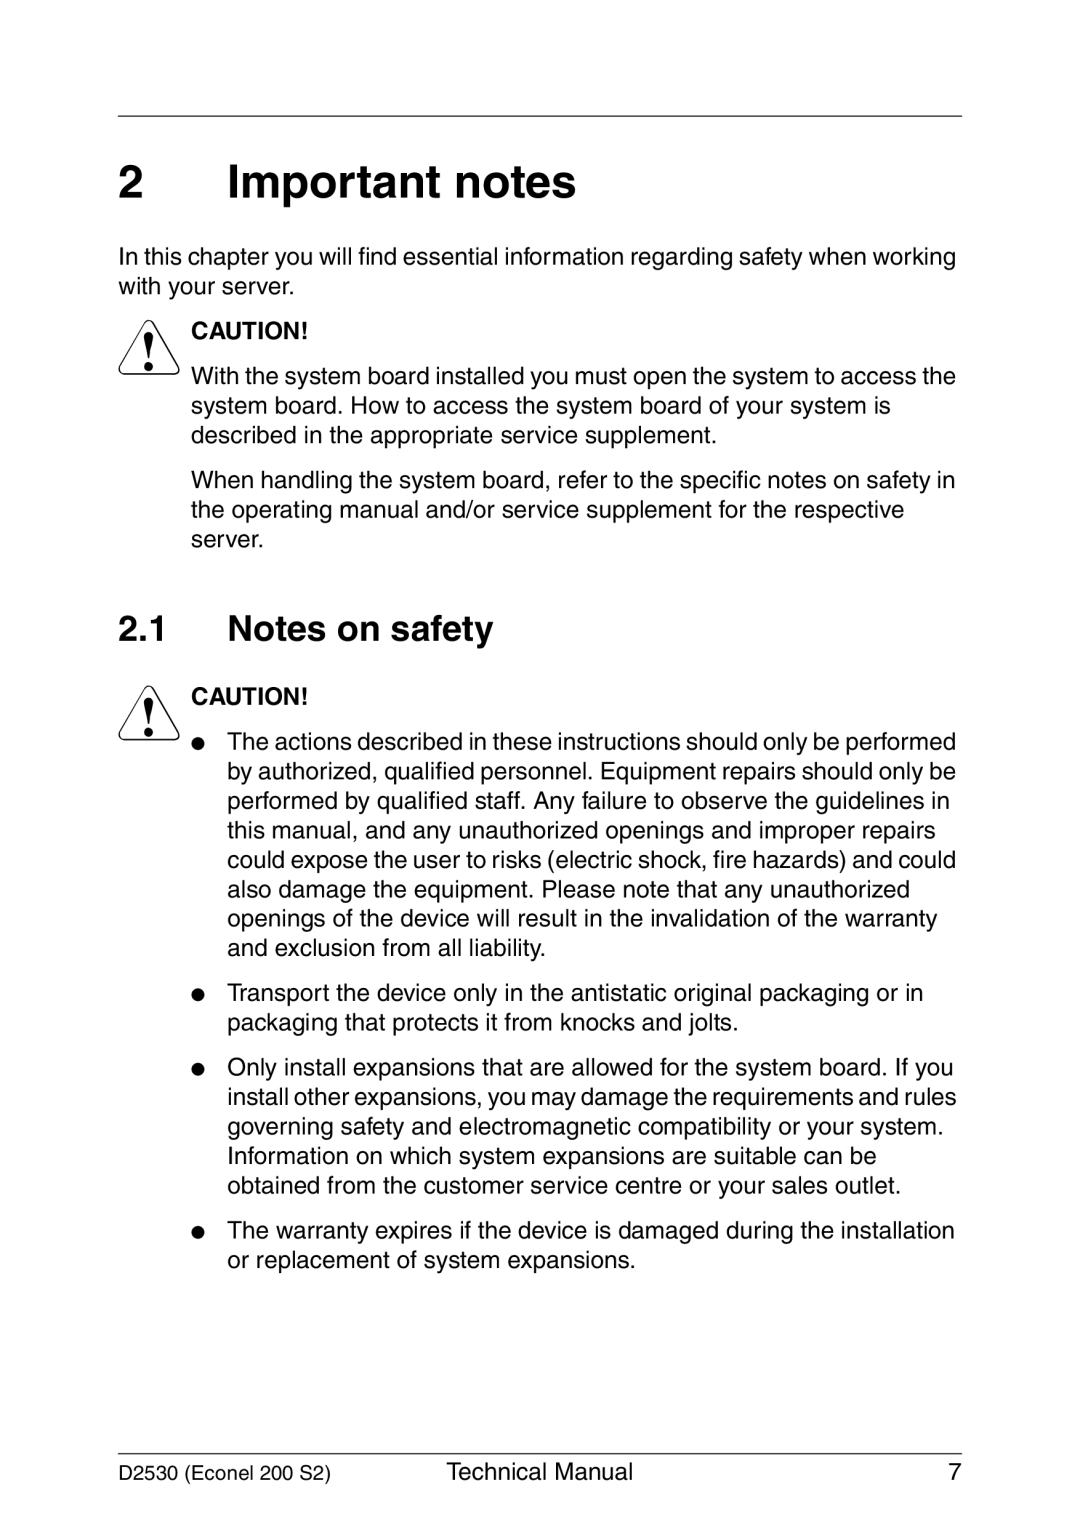 Fujitsu D2530 technical manual Important notes 